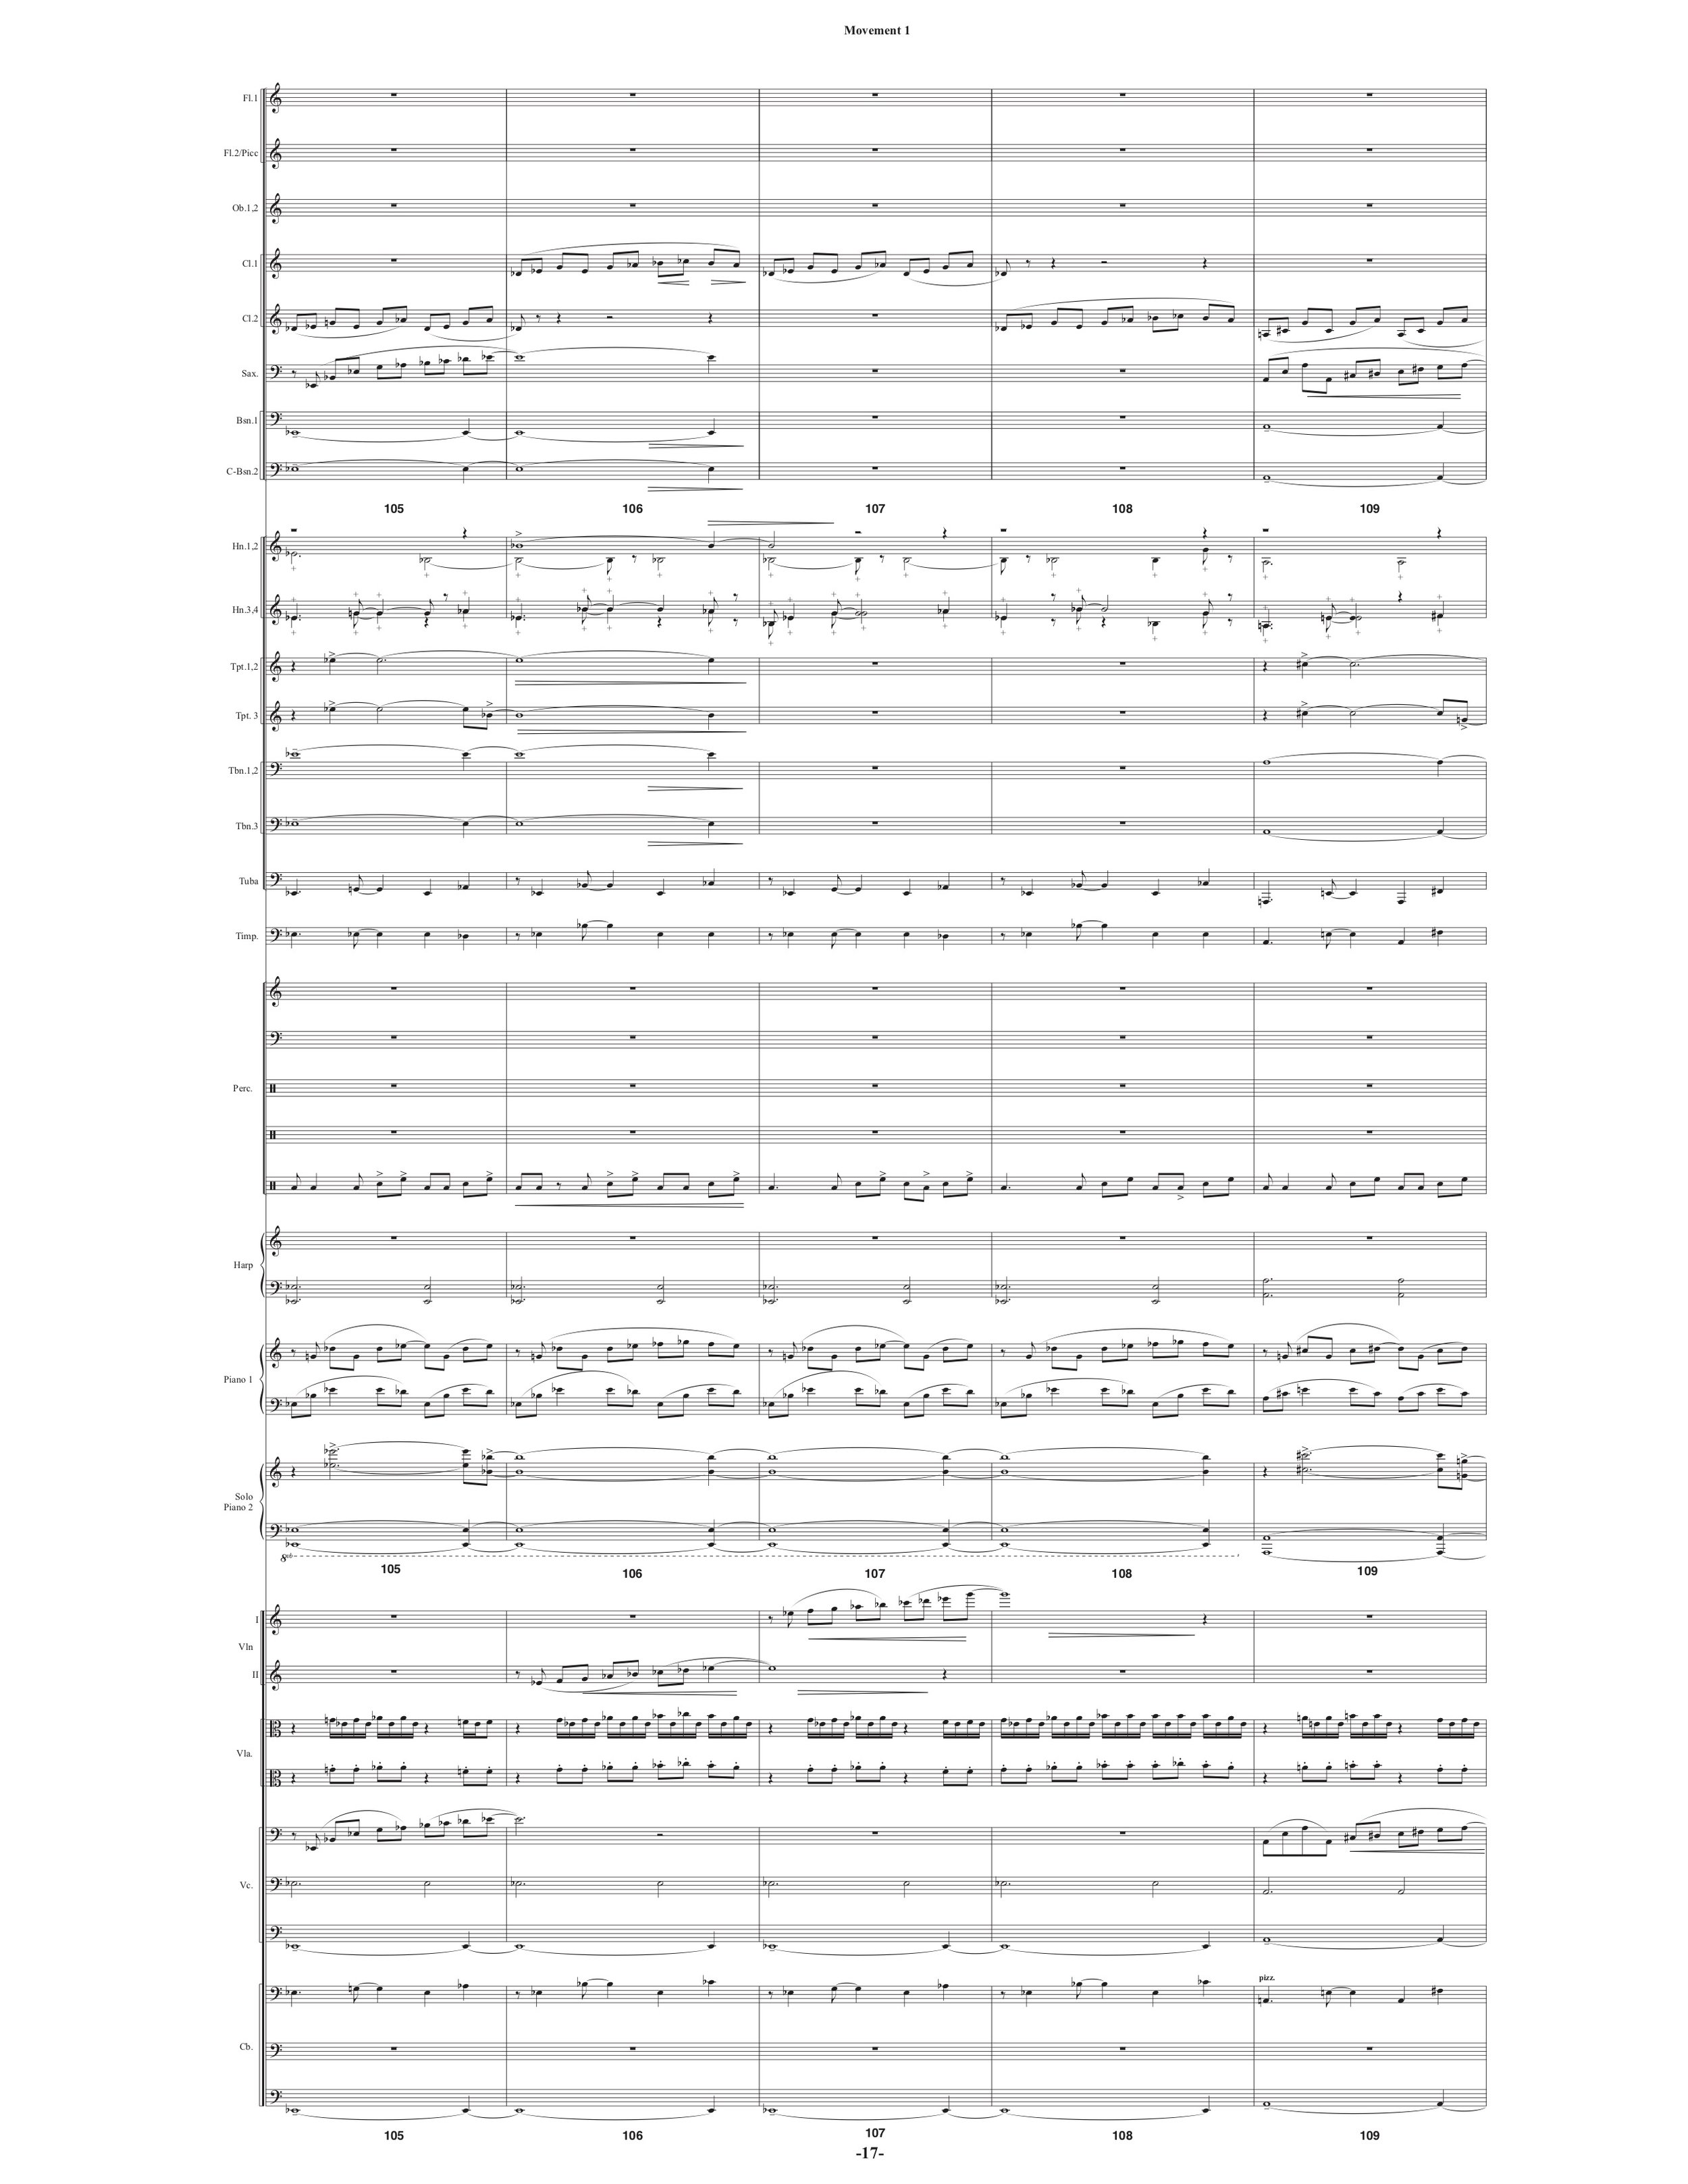 Symphony_Orch & 2 Pianos p22.jpg